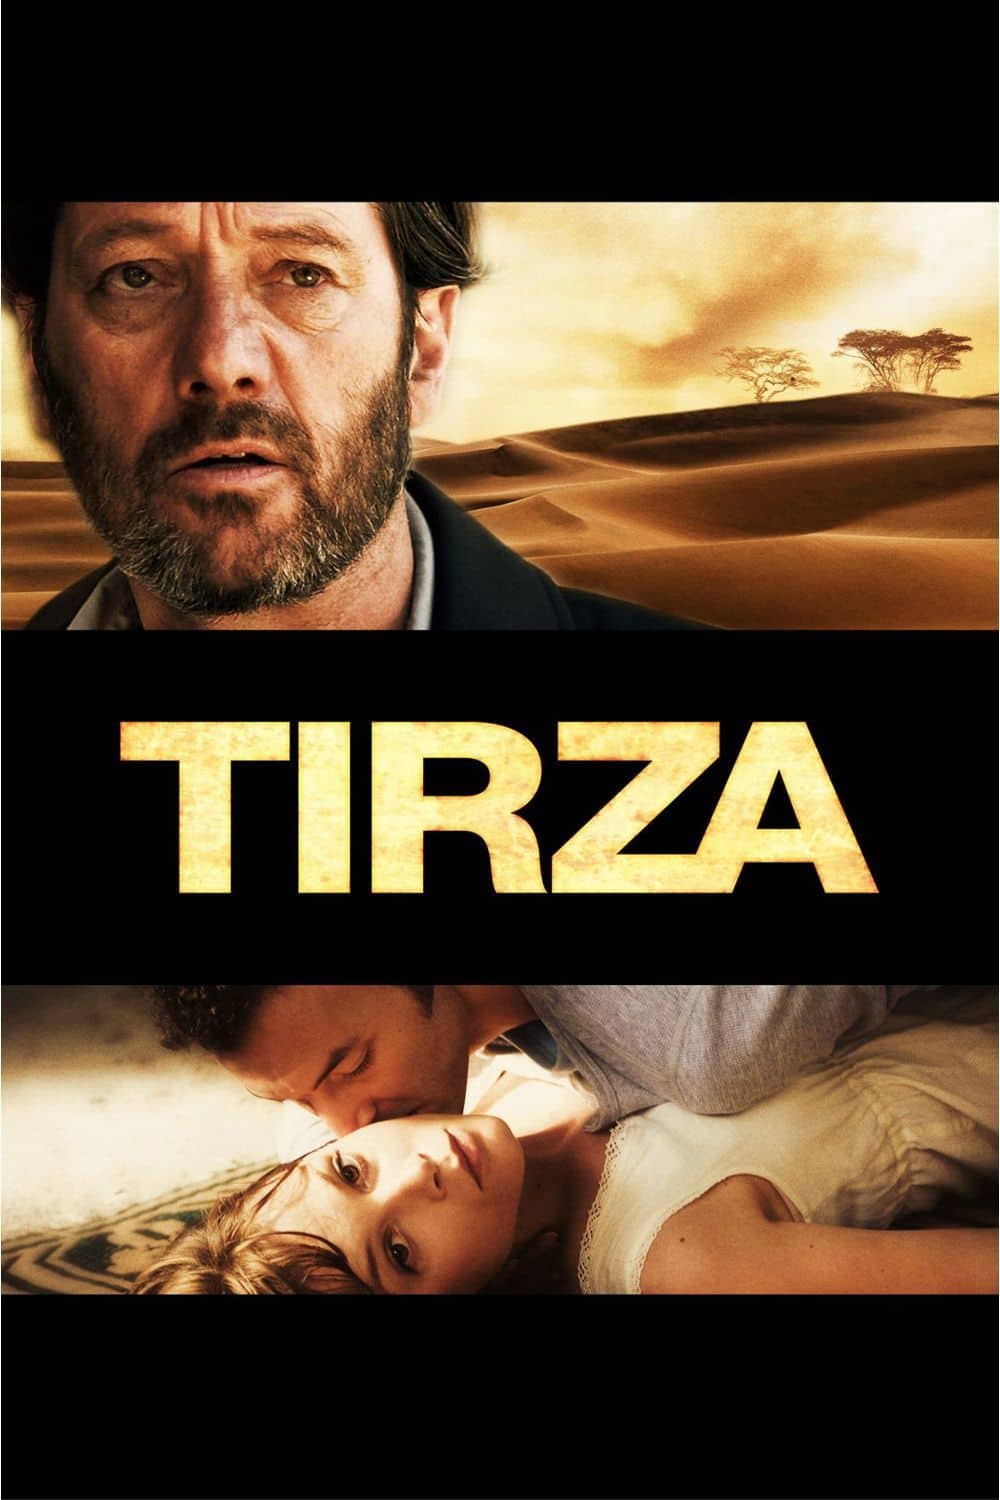 Tirza, 2010 